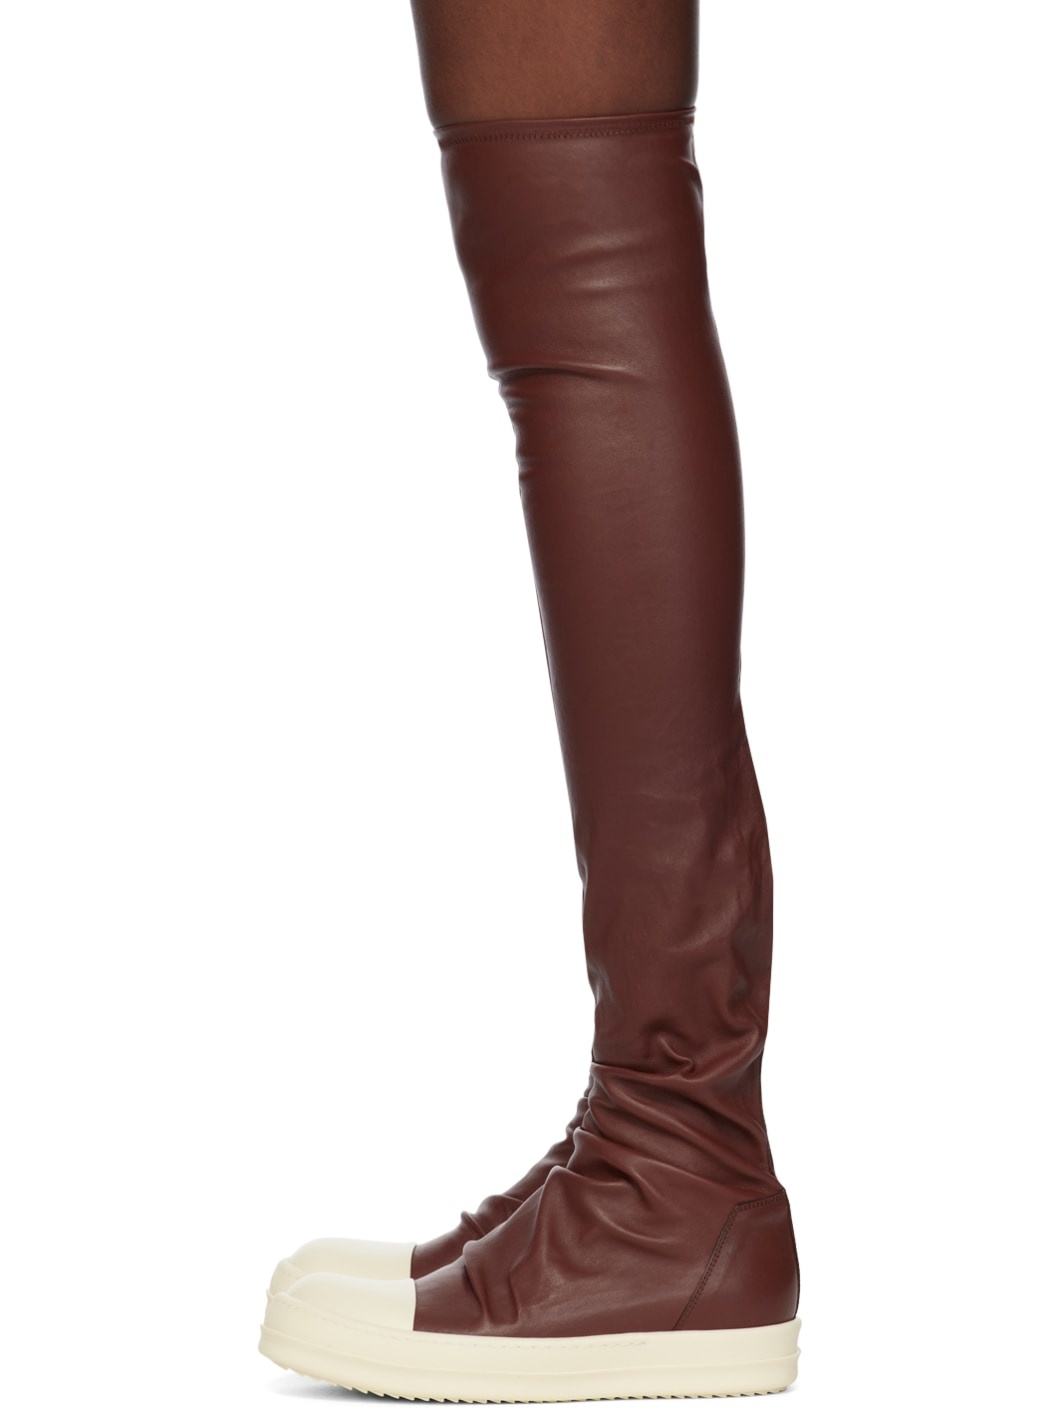 Burgundy Knee-High Stocking Boots - 3